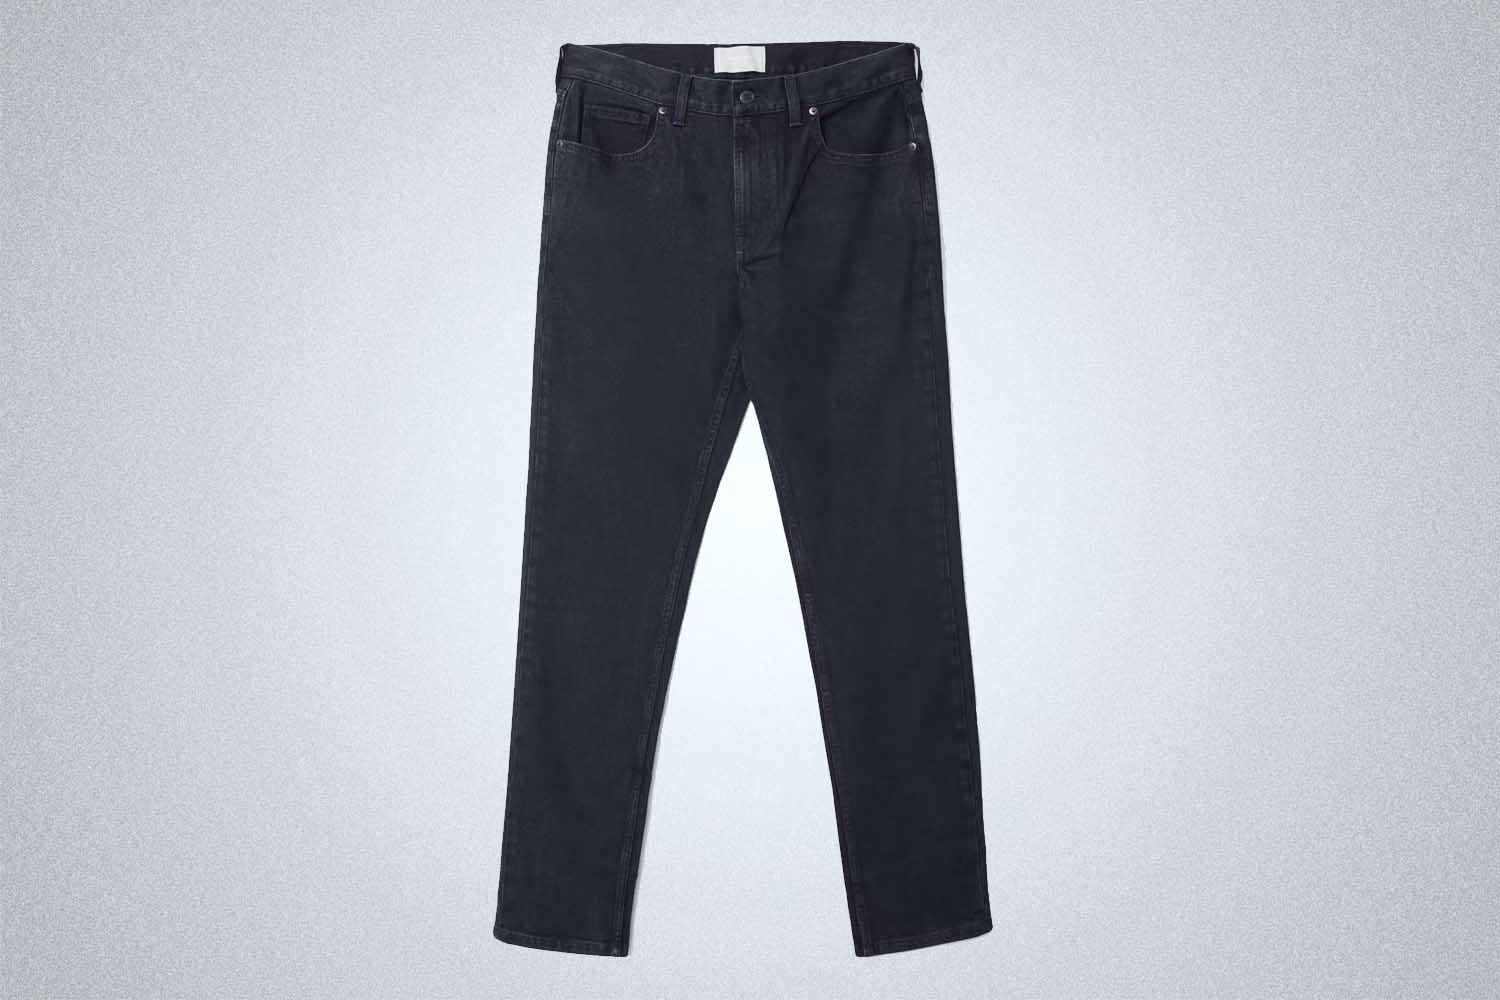 Everlane Organic Cotton Slim Fit Jean